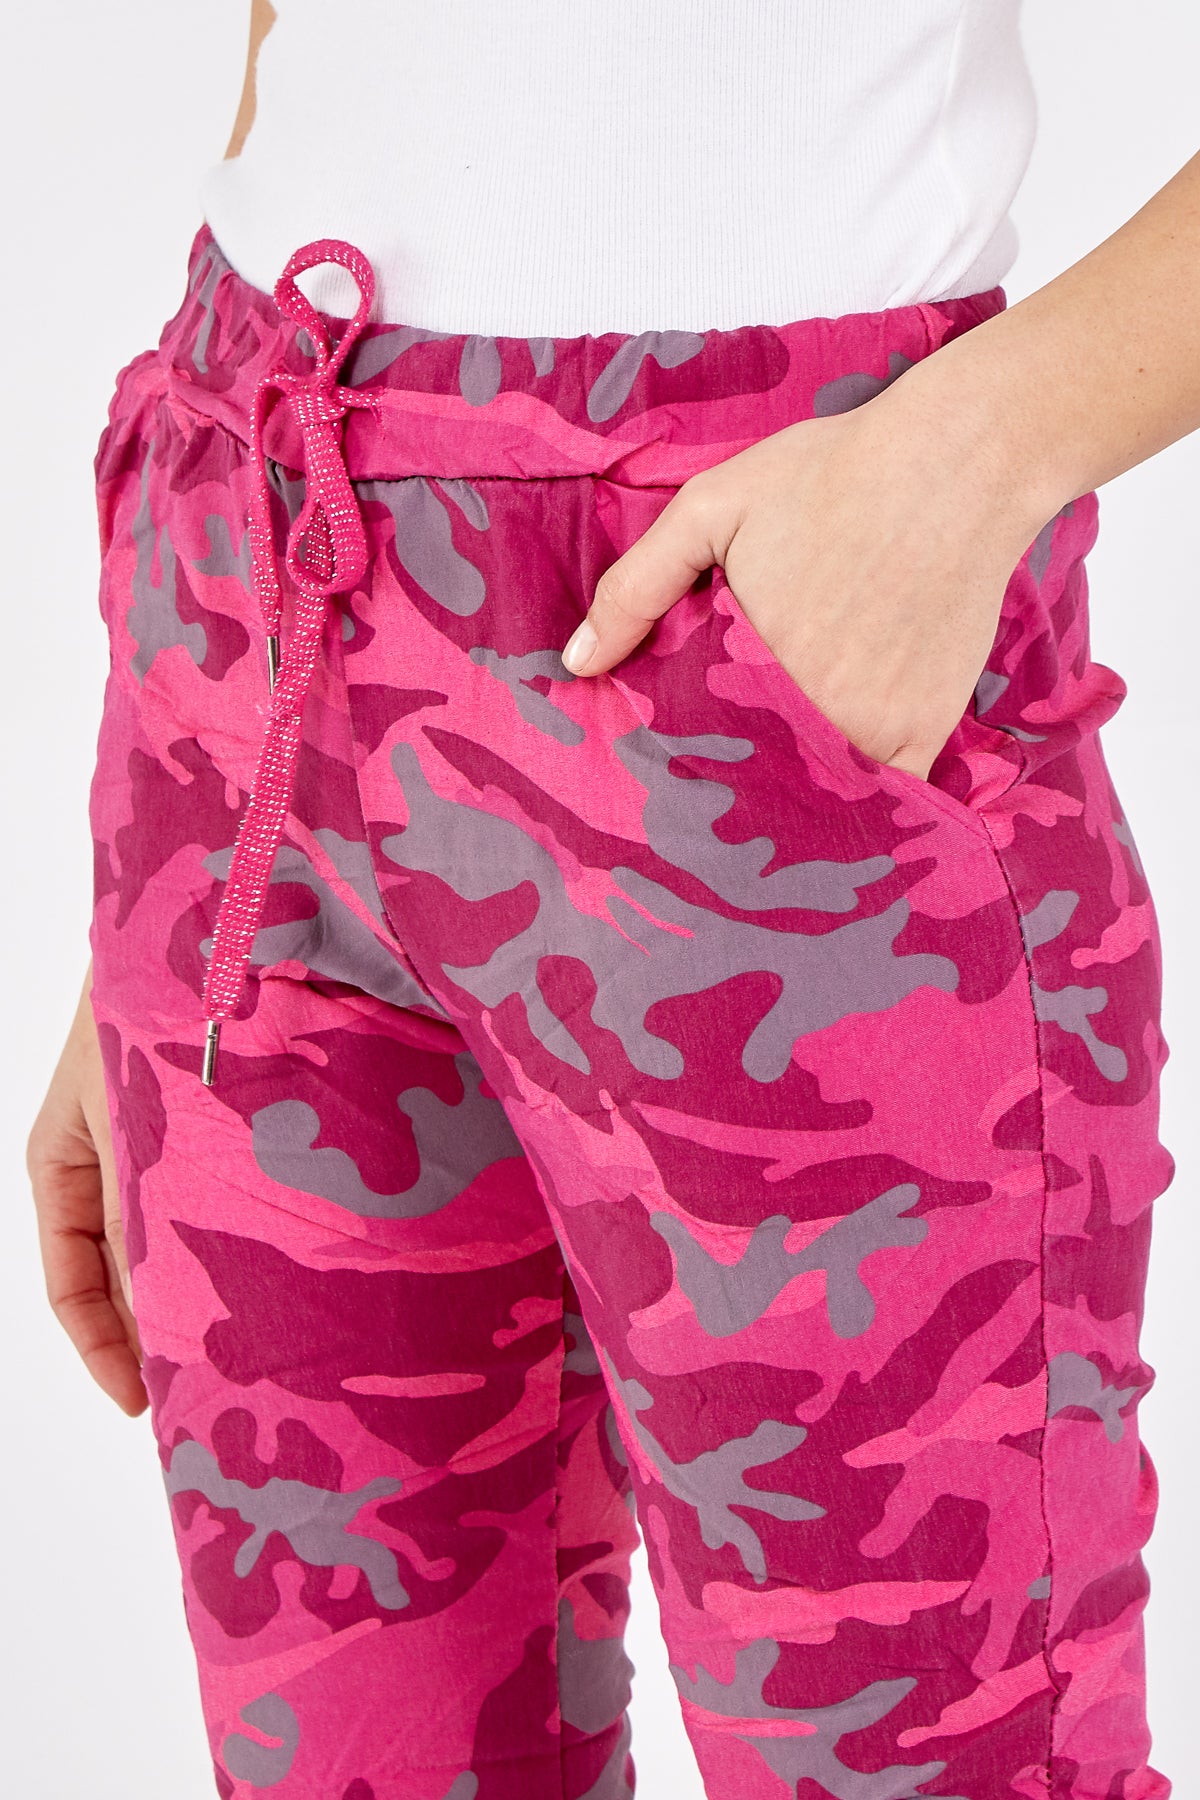 Magic Super Stretch Camouflage Print Trousers